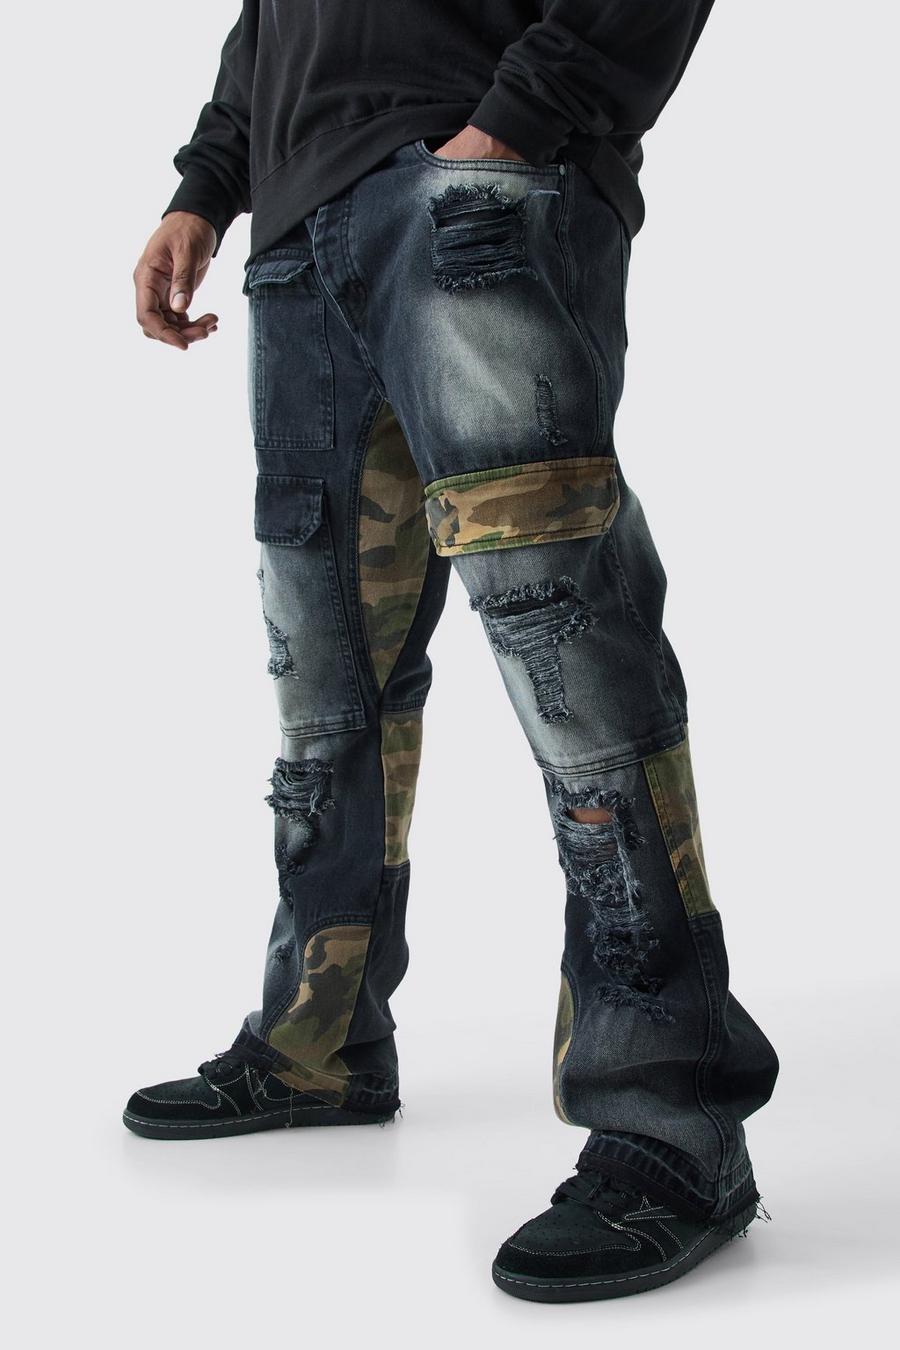 Jeans Cargo Plus Size Slim Fit in denim rigido in fantasia militare con rattoppi, Washed black image number 1